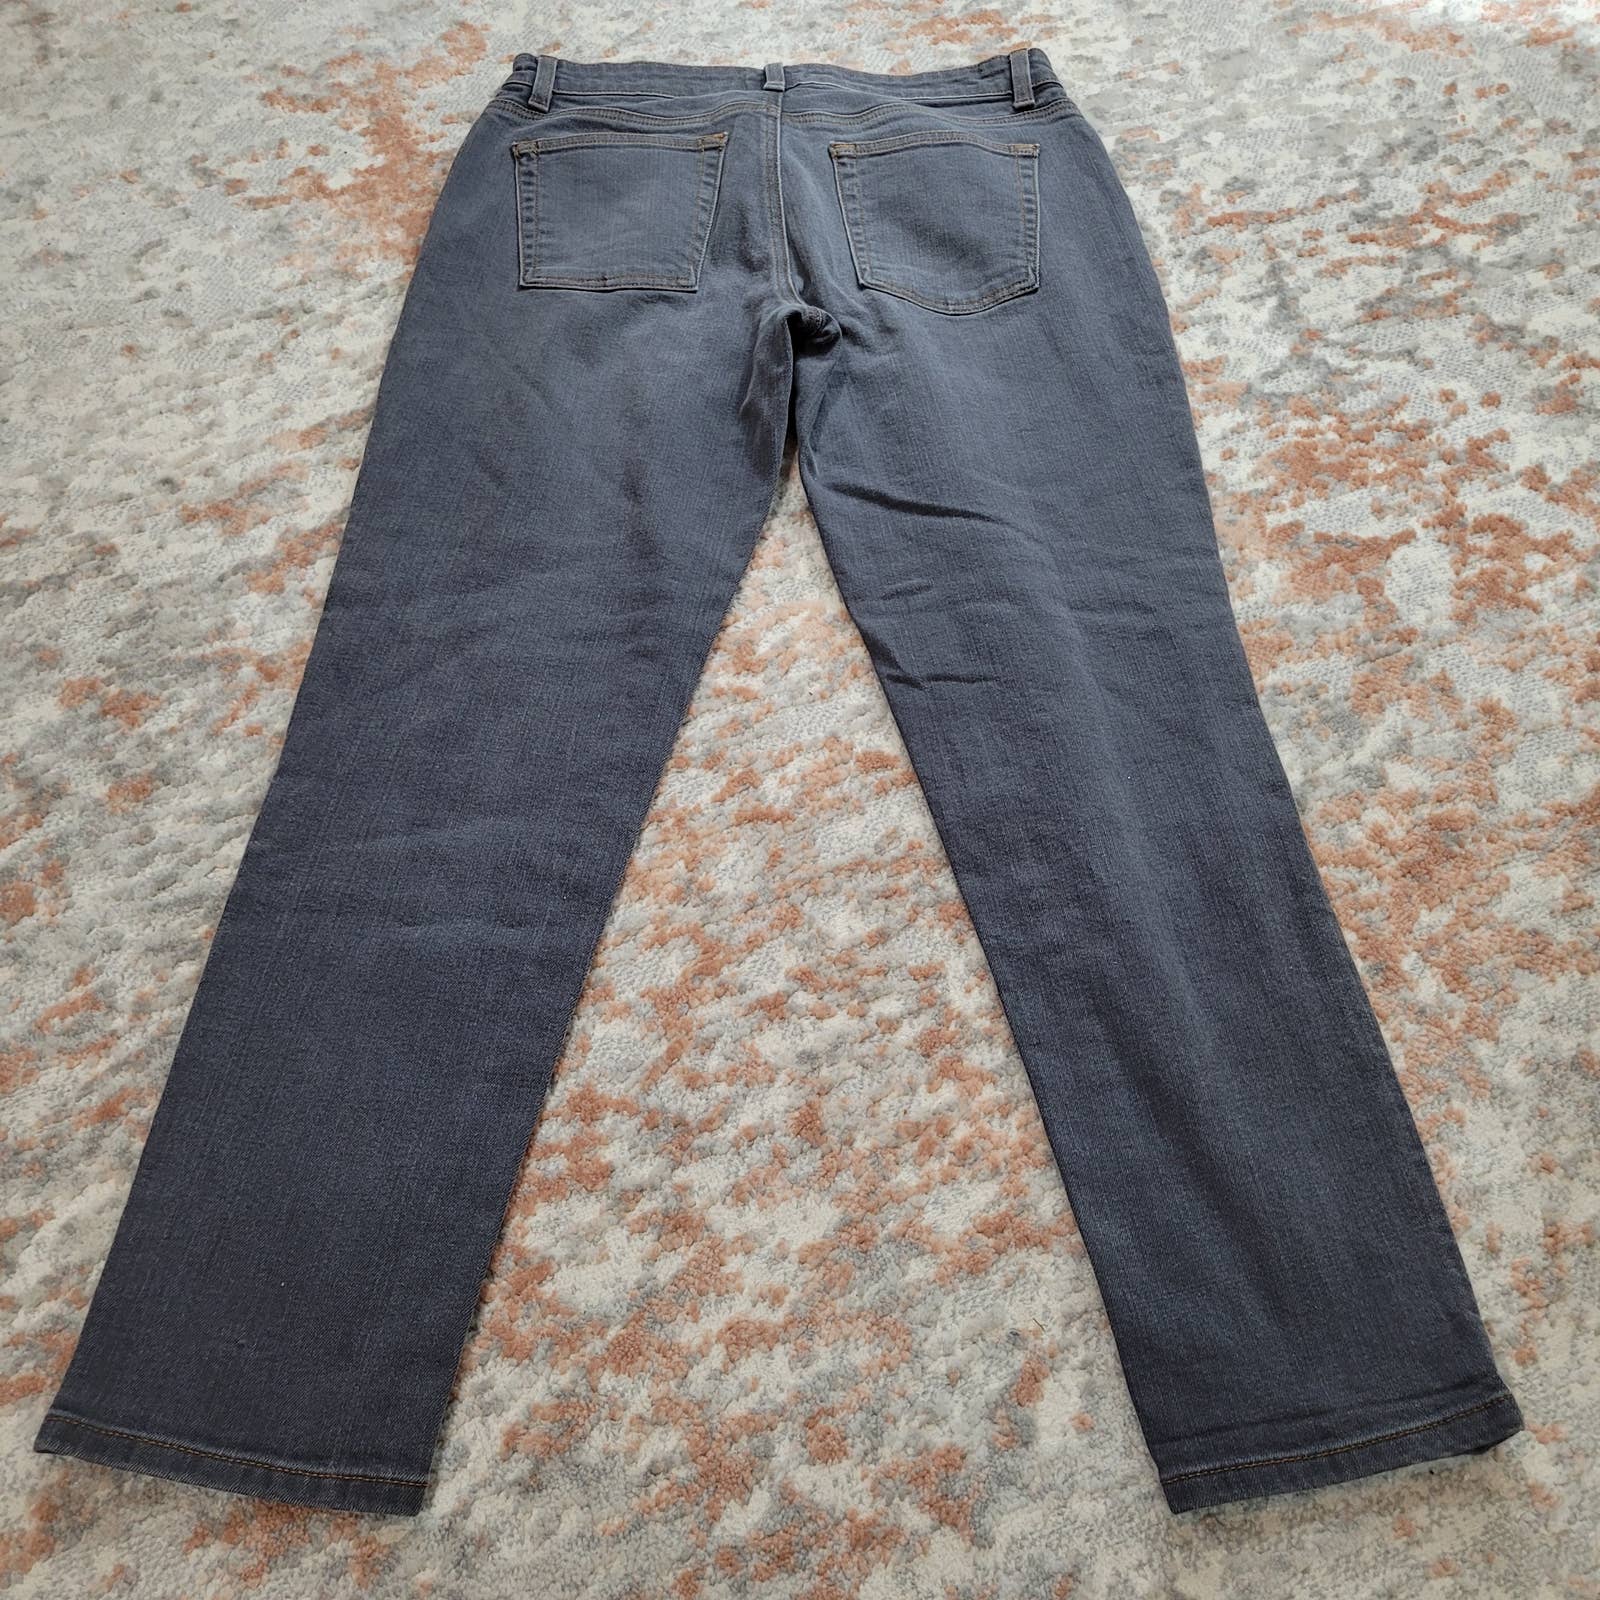 Eileen Fisher Light Gray Wash Jeans - Size 4Markita's ClosetEileen Fisher